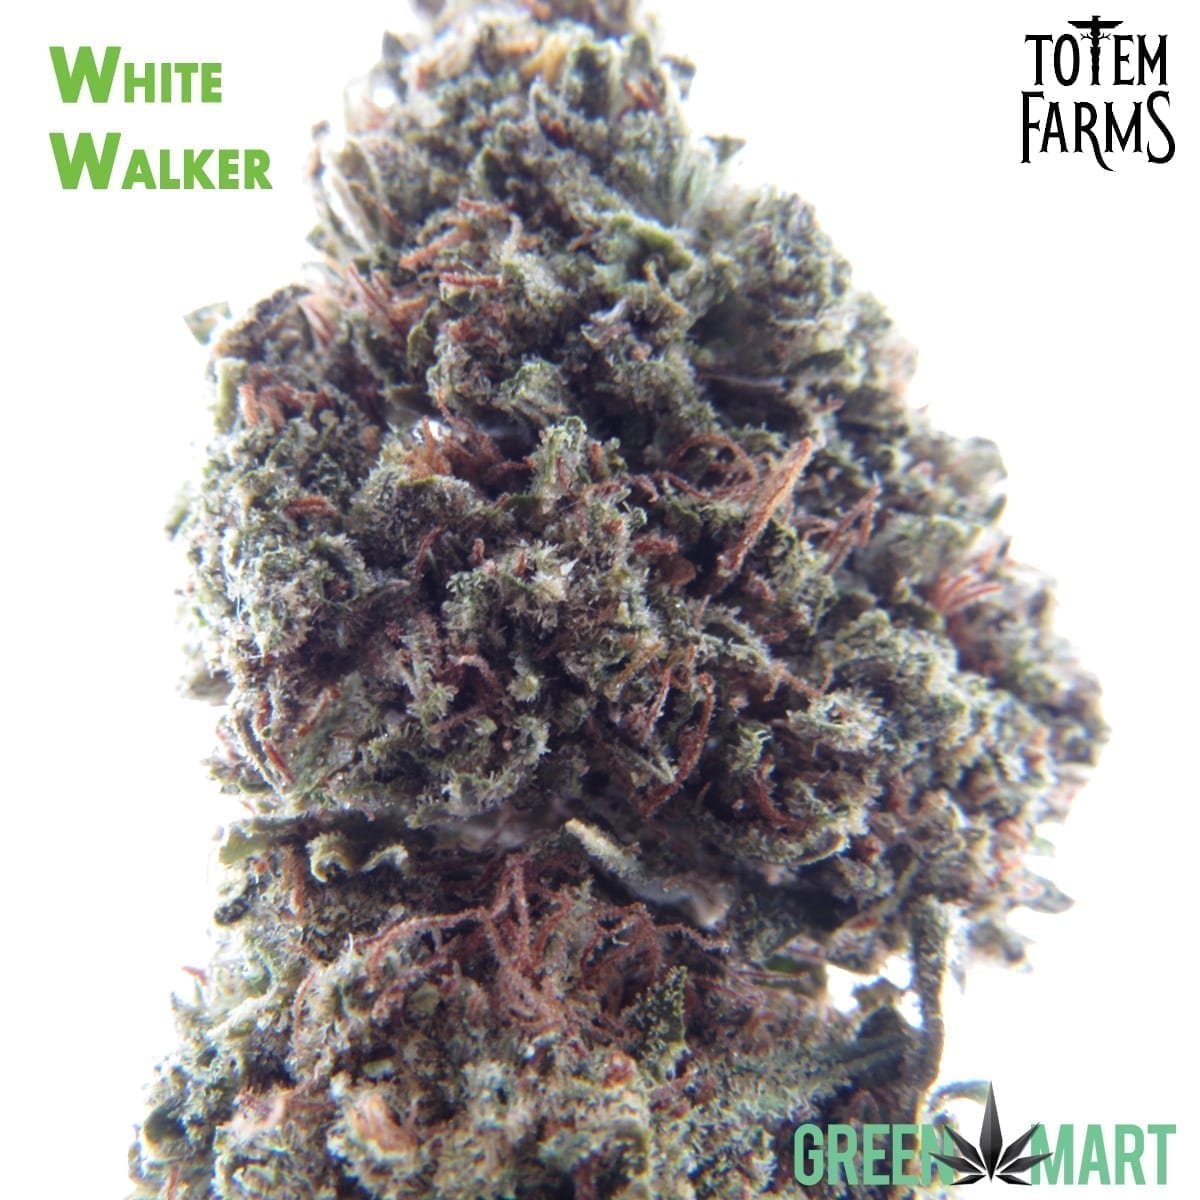 White Walker by Totem Farms